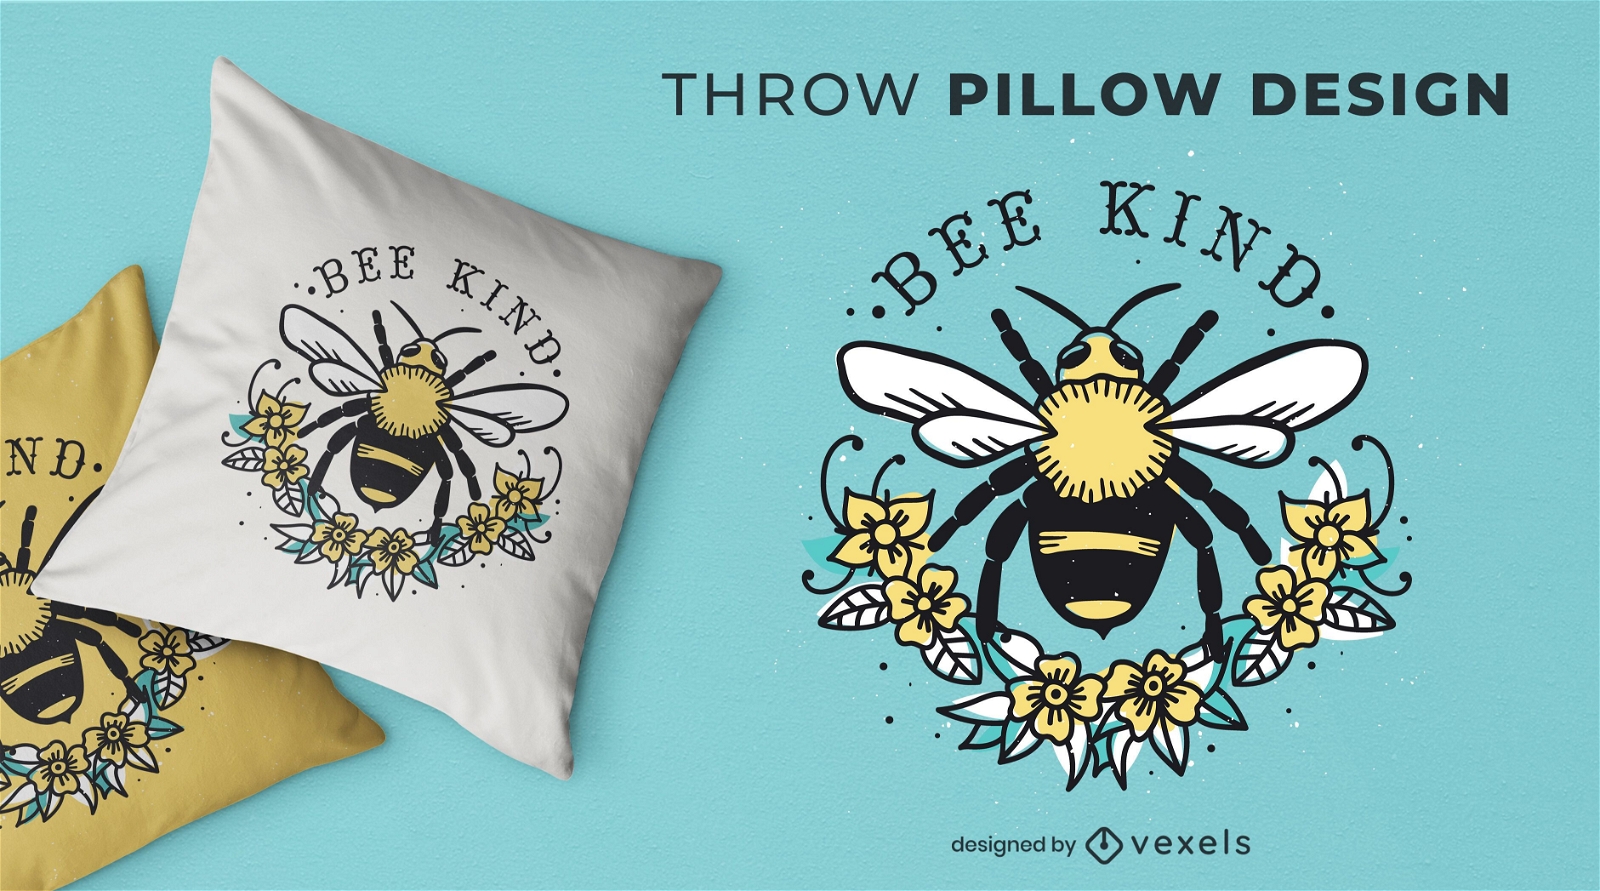 Diseño de almohada tipo abeja